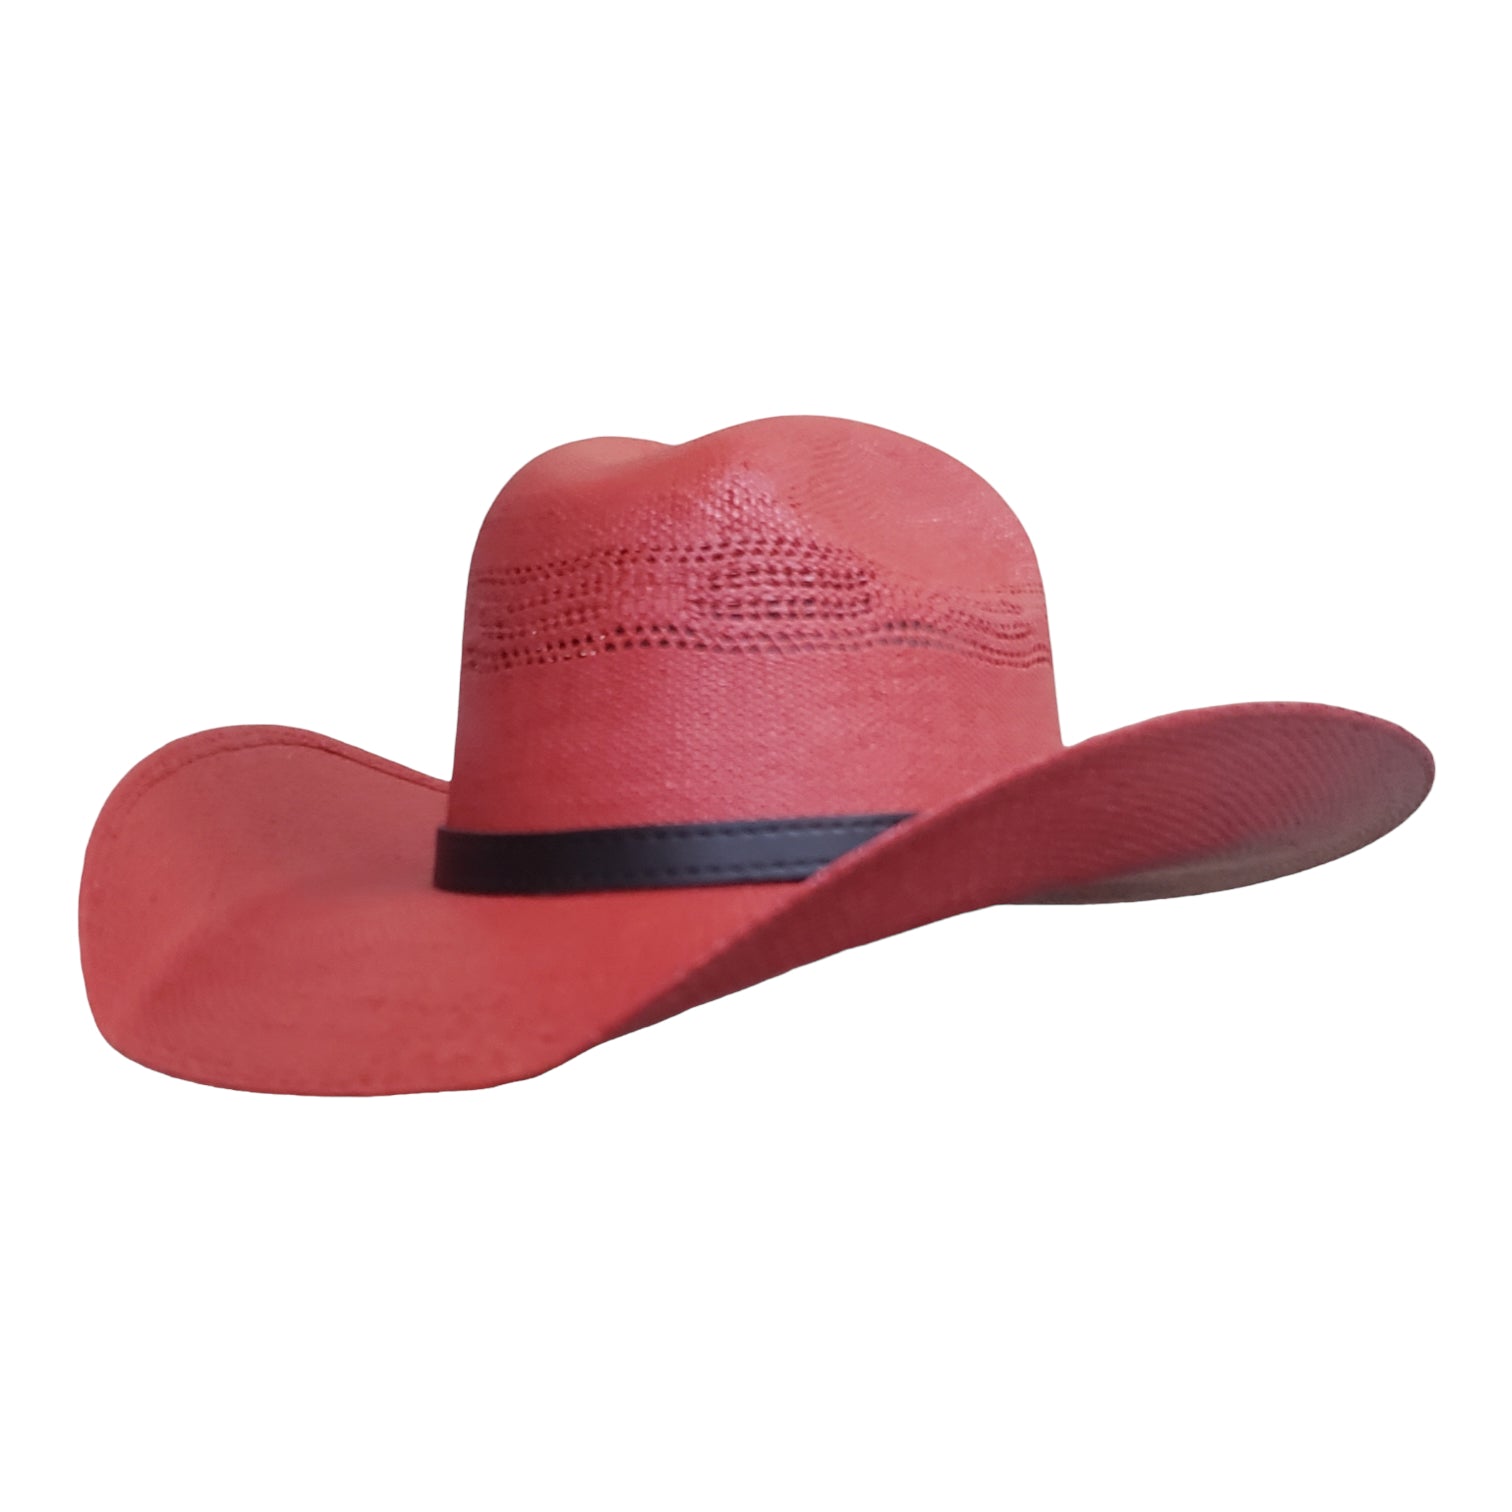 Gone Country Hats Rio Red - Straw Bangora